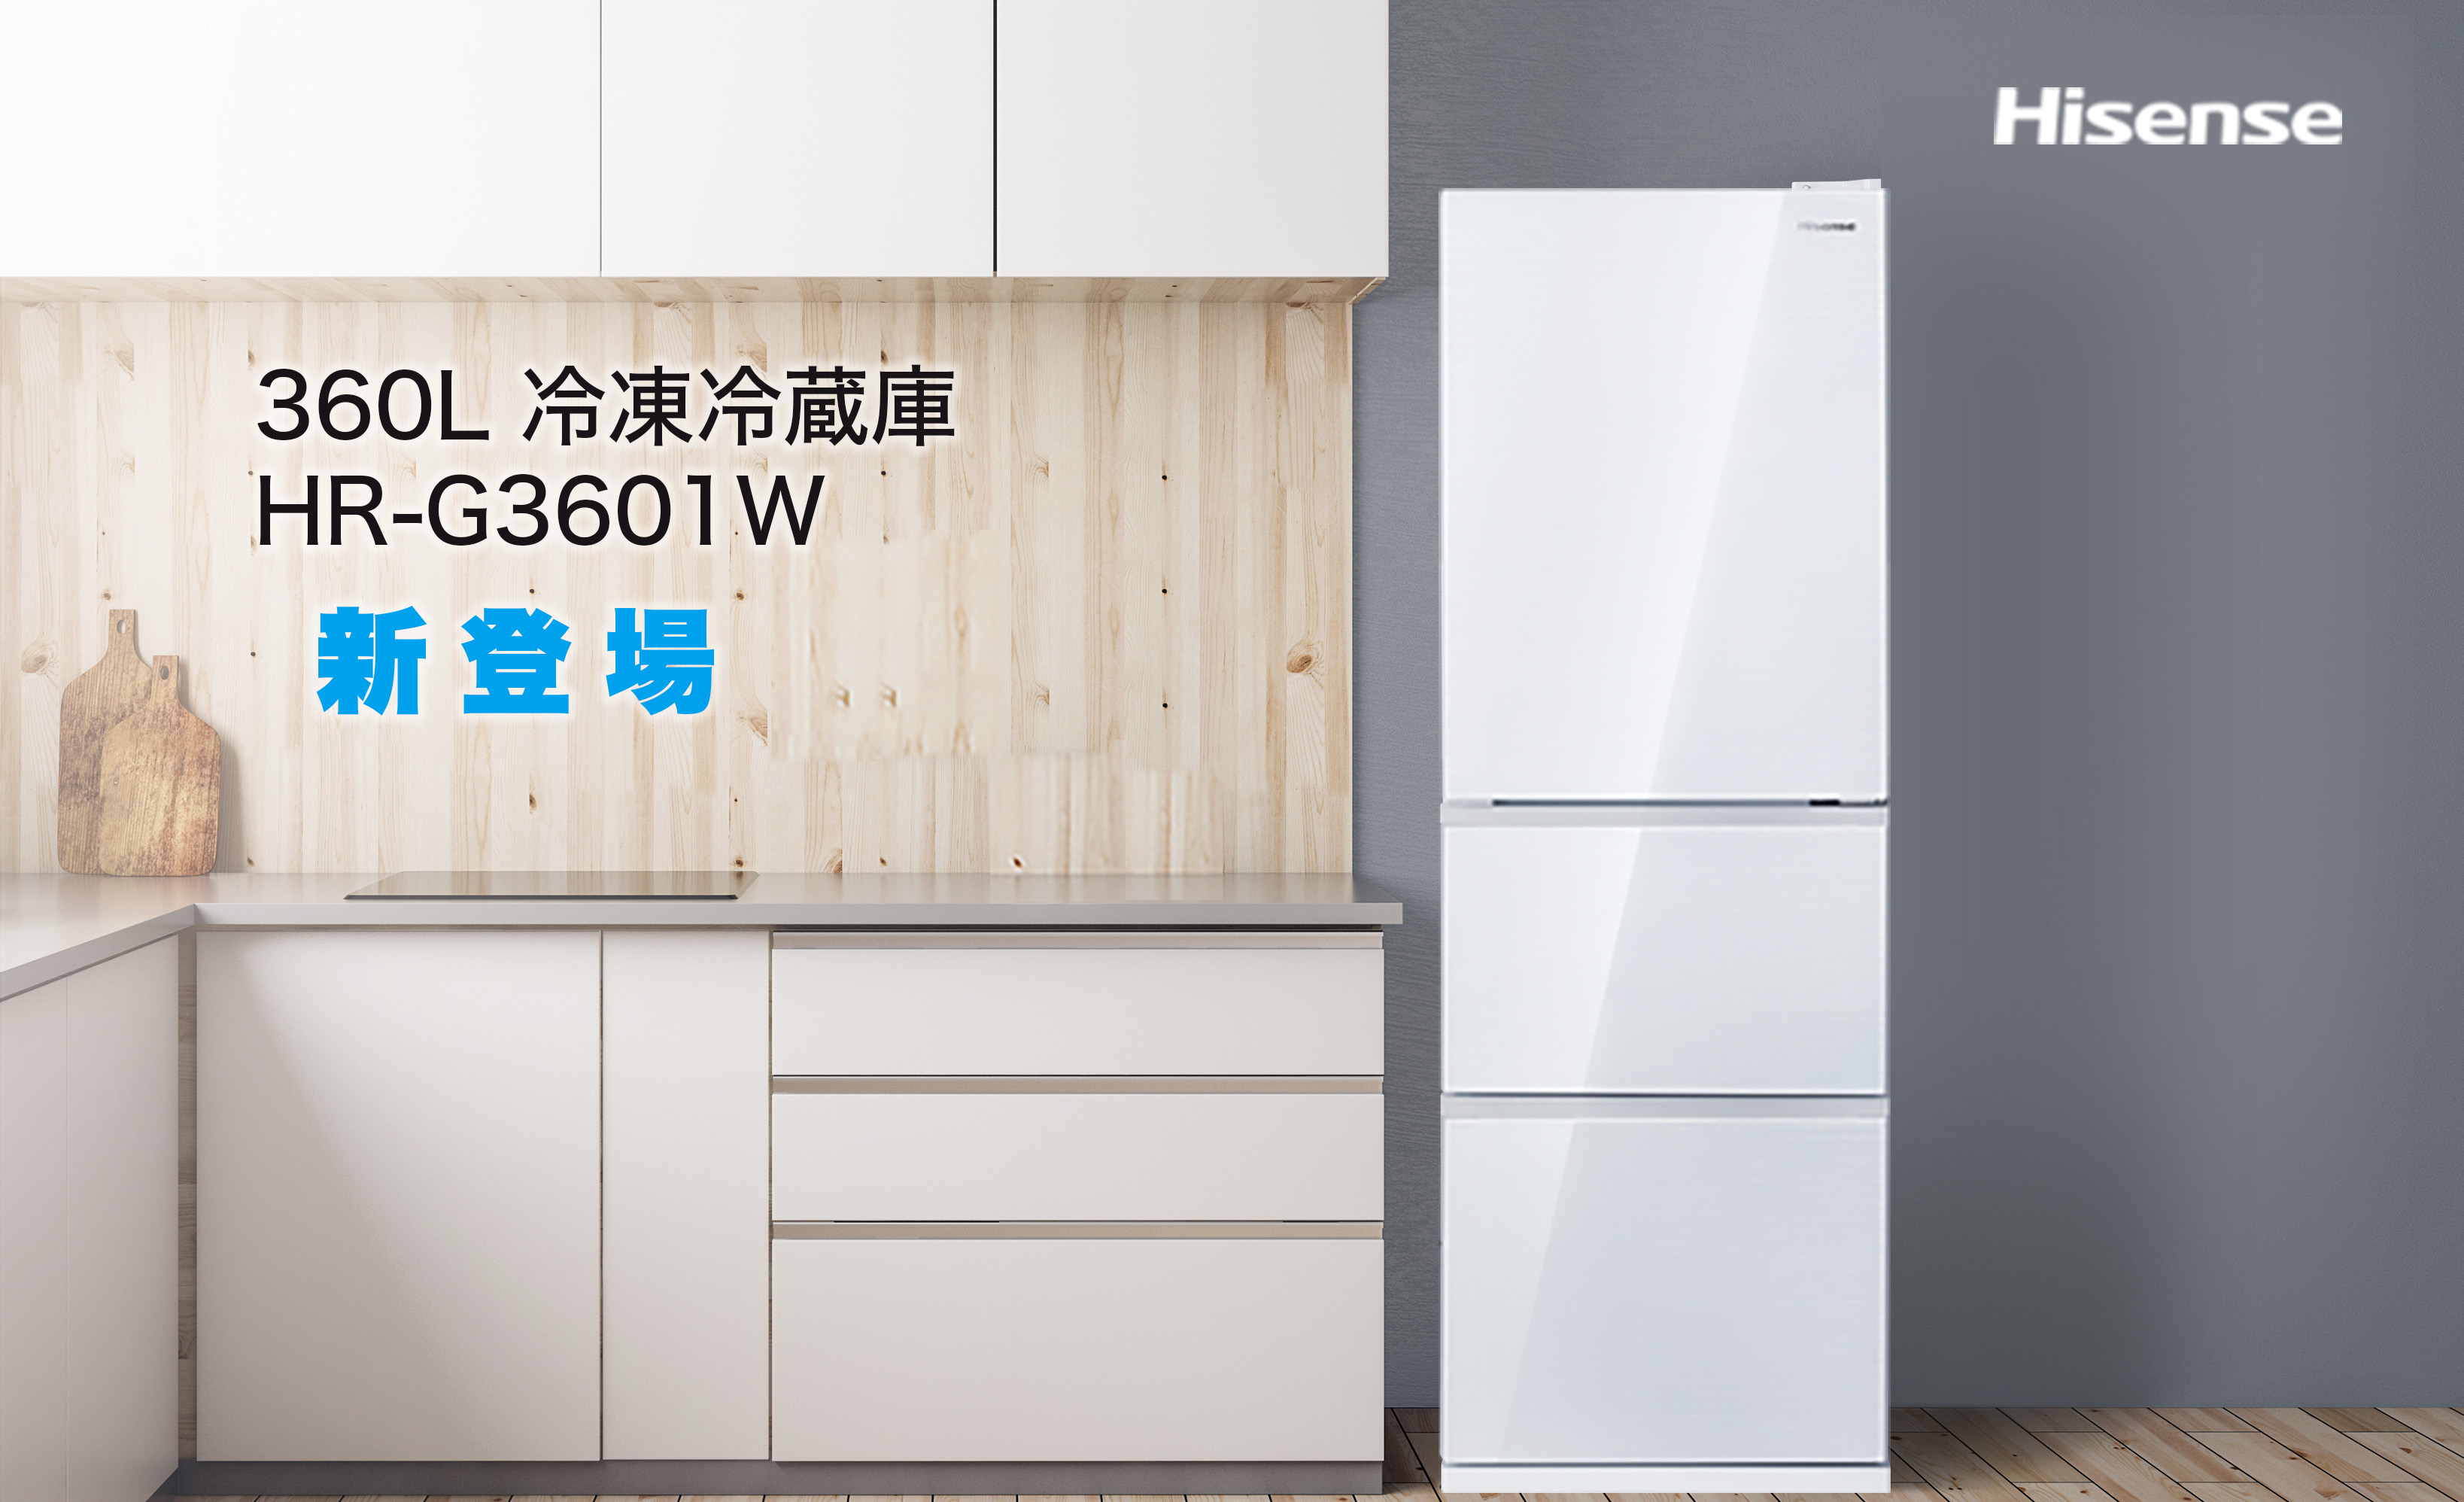 日本最大の 2022年式 冷蔵庫 Hisense HR-G3601W 冷蔵庫 